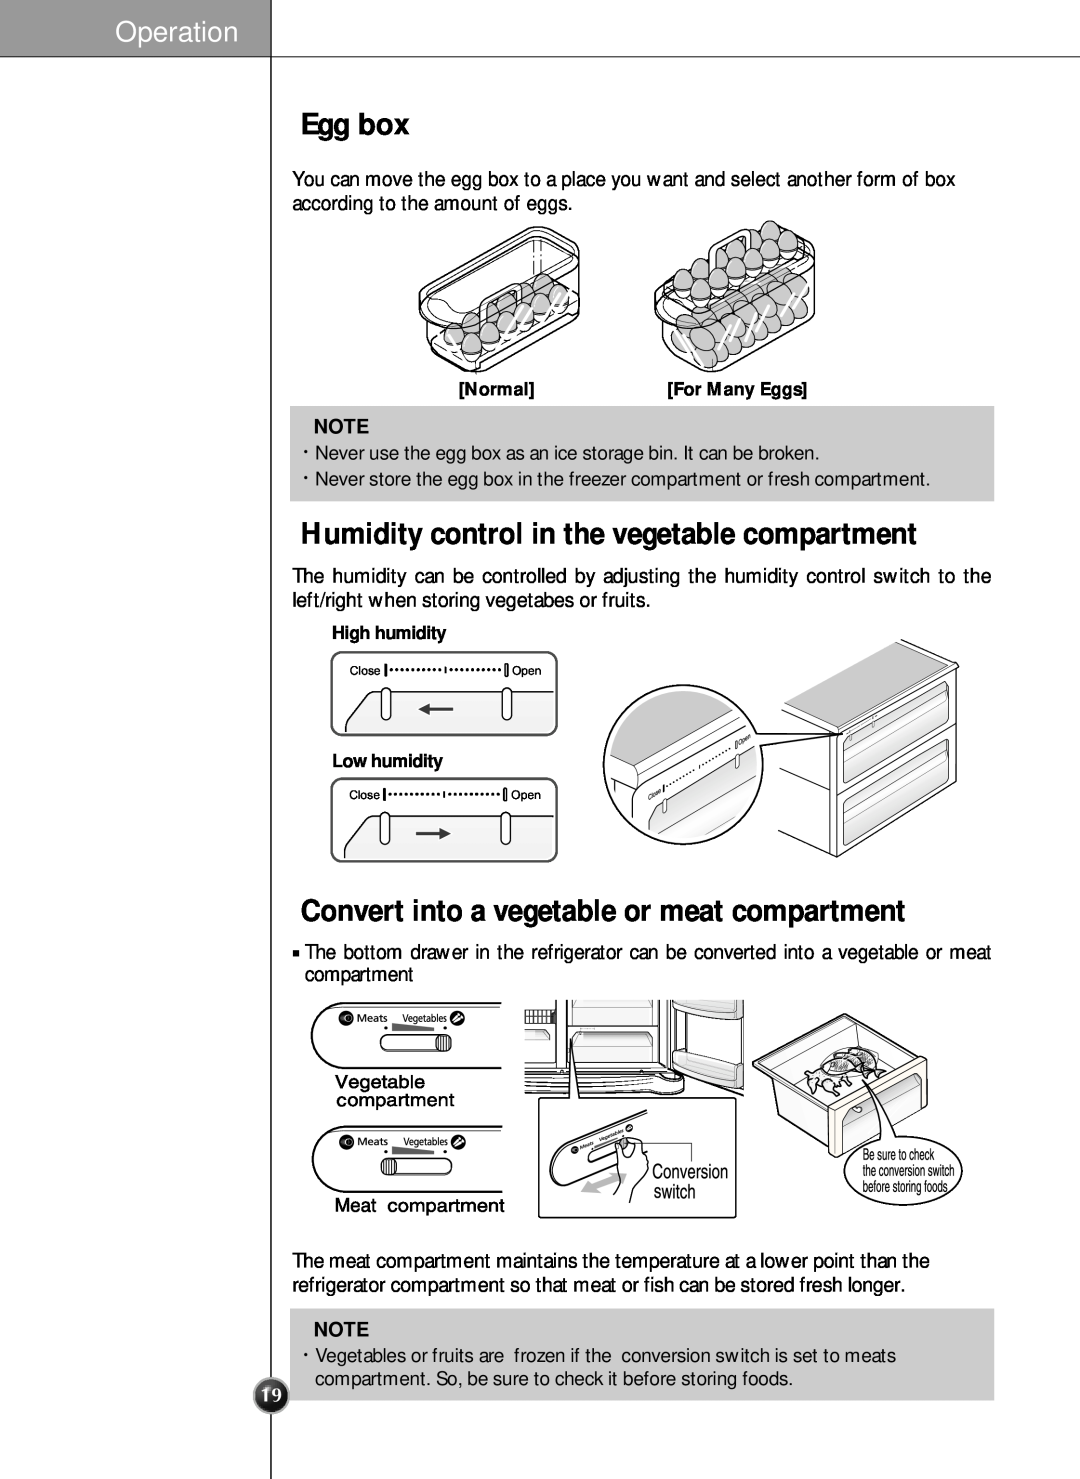 LG Electronics LRSC21935TT, LRSC21935SW, LRSC21935SB Egg box, Humidity control in the vegetable compartment, Operation 